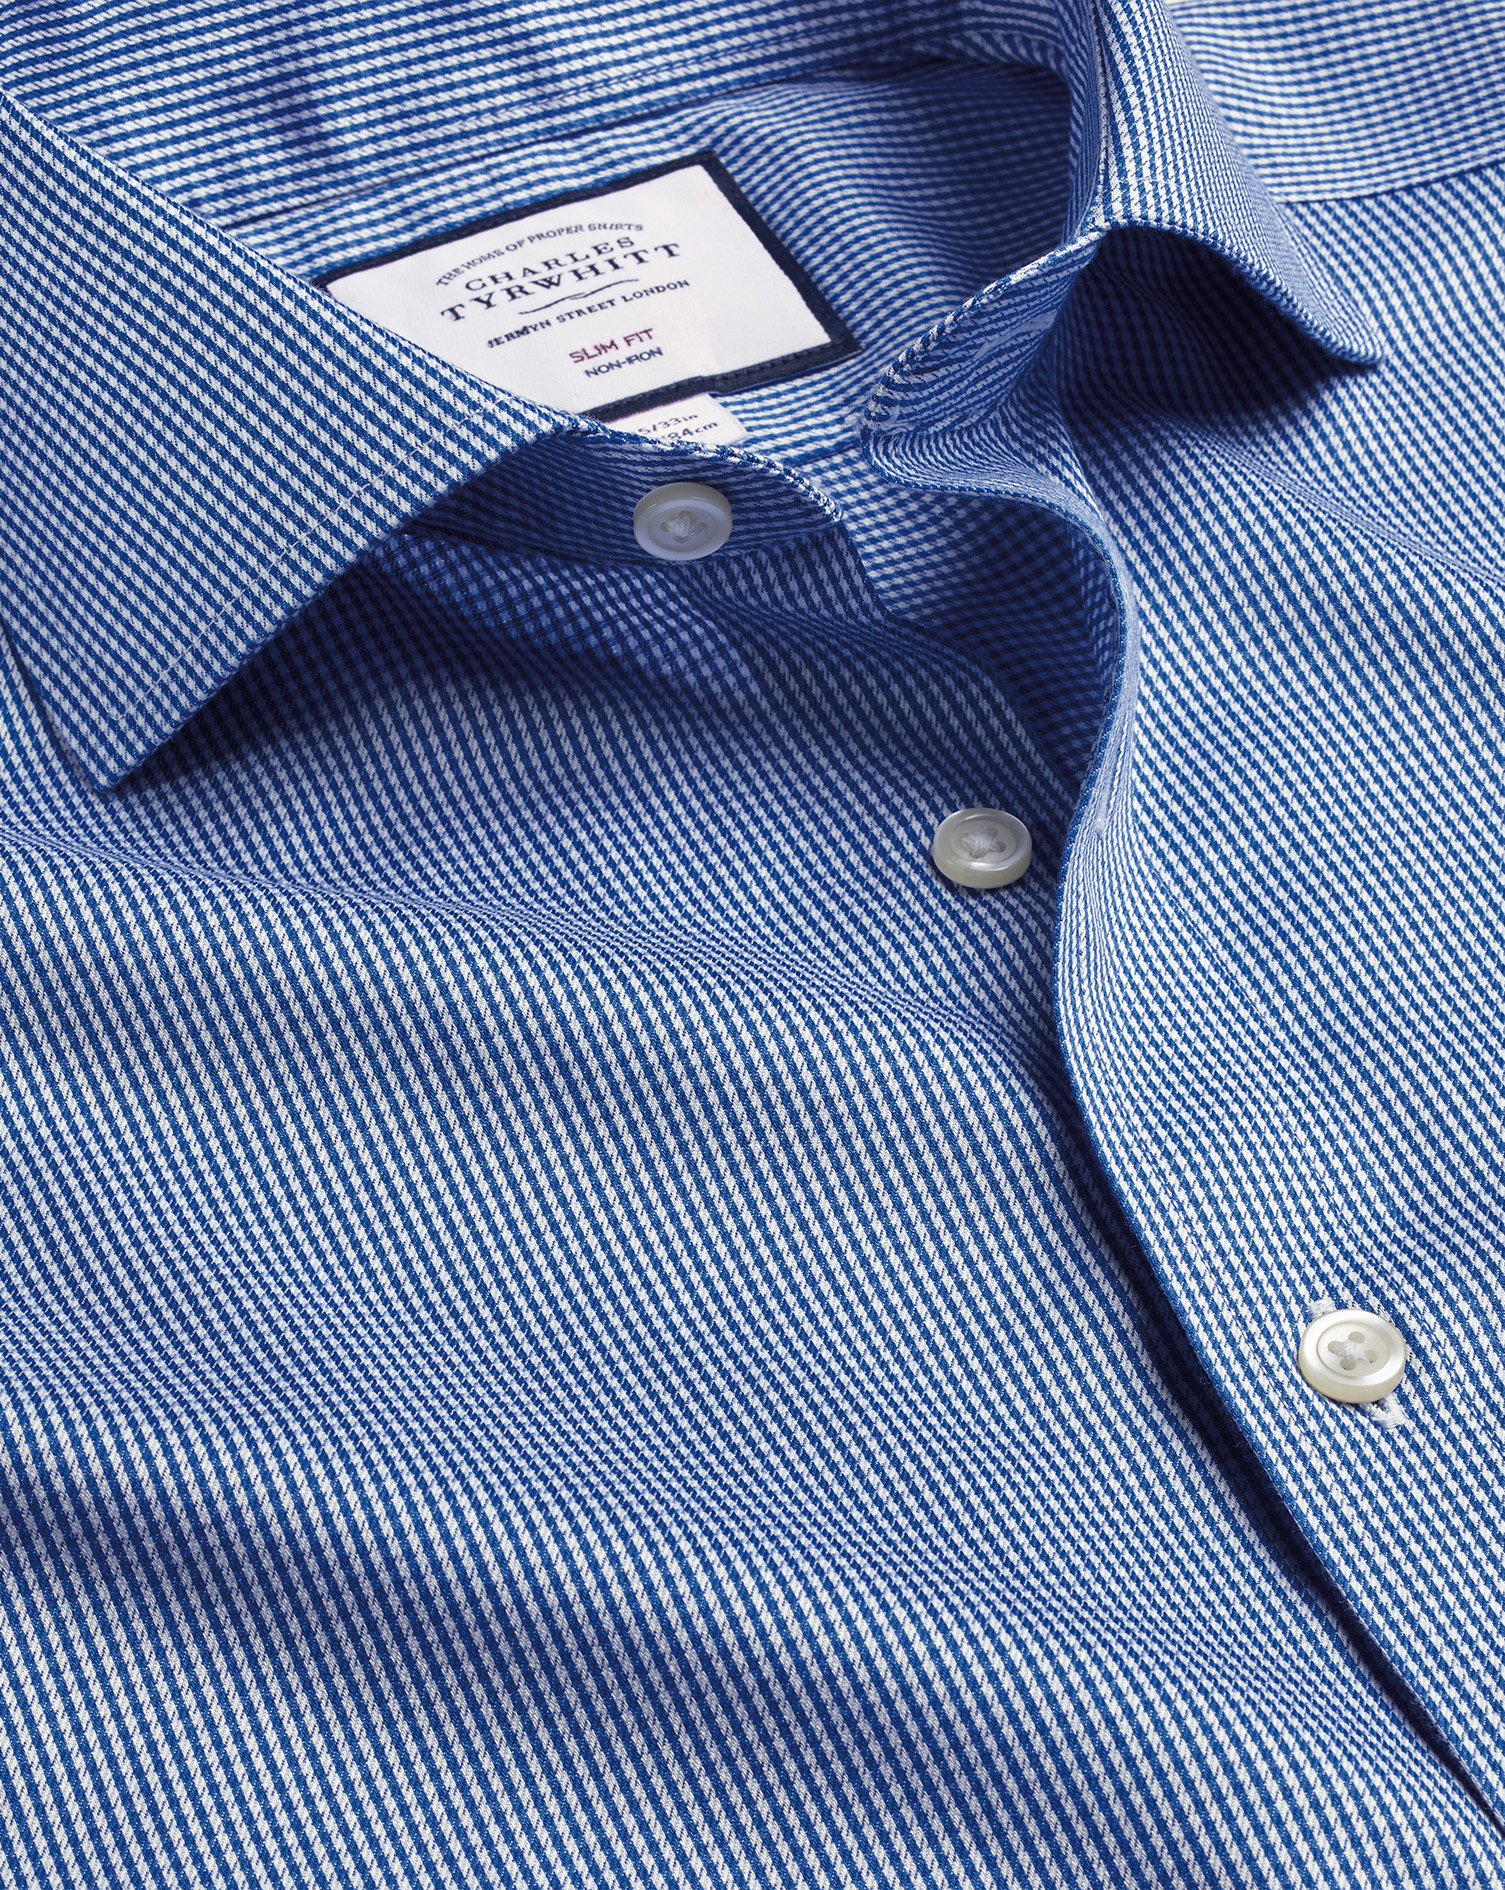 Men's Charles Tyrwhitt Cutaway Collar Non-Iron Puppytooth Dress Shirt - Royal Blue Single Cuff Size 